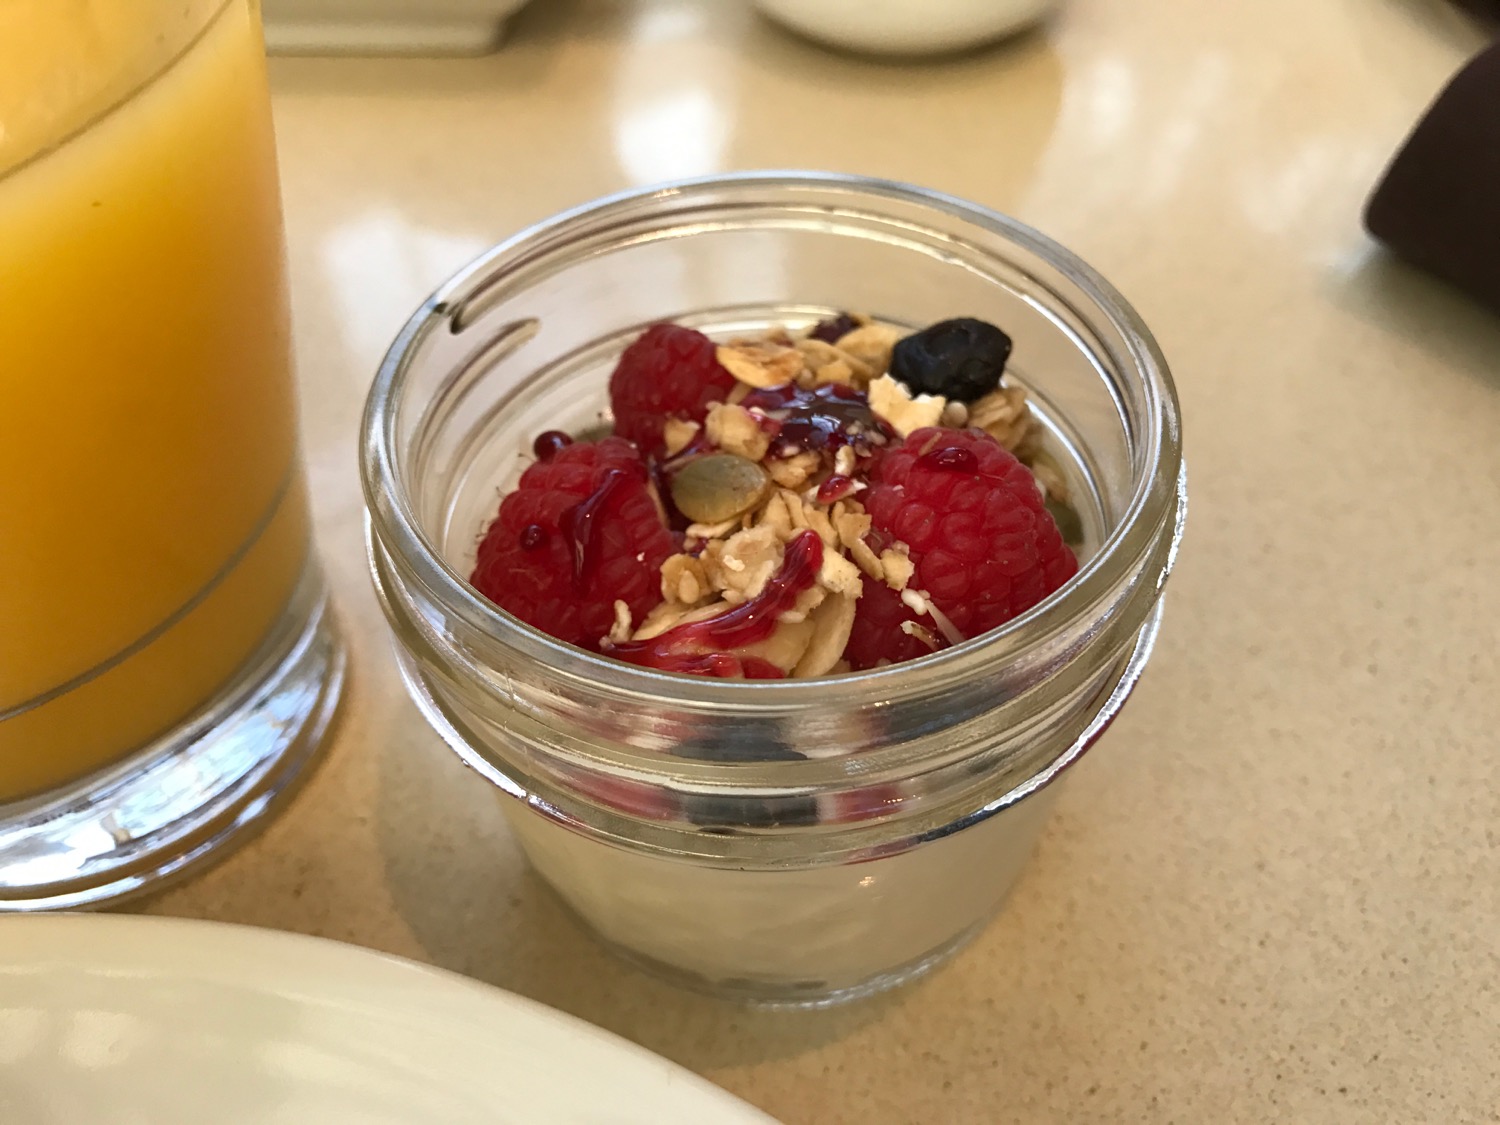 a jar of food with berries and yogurt